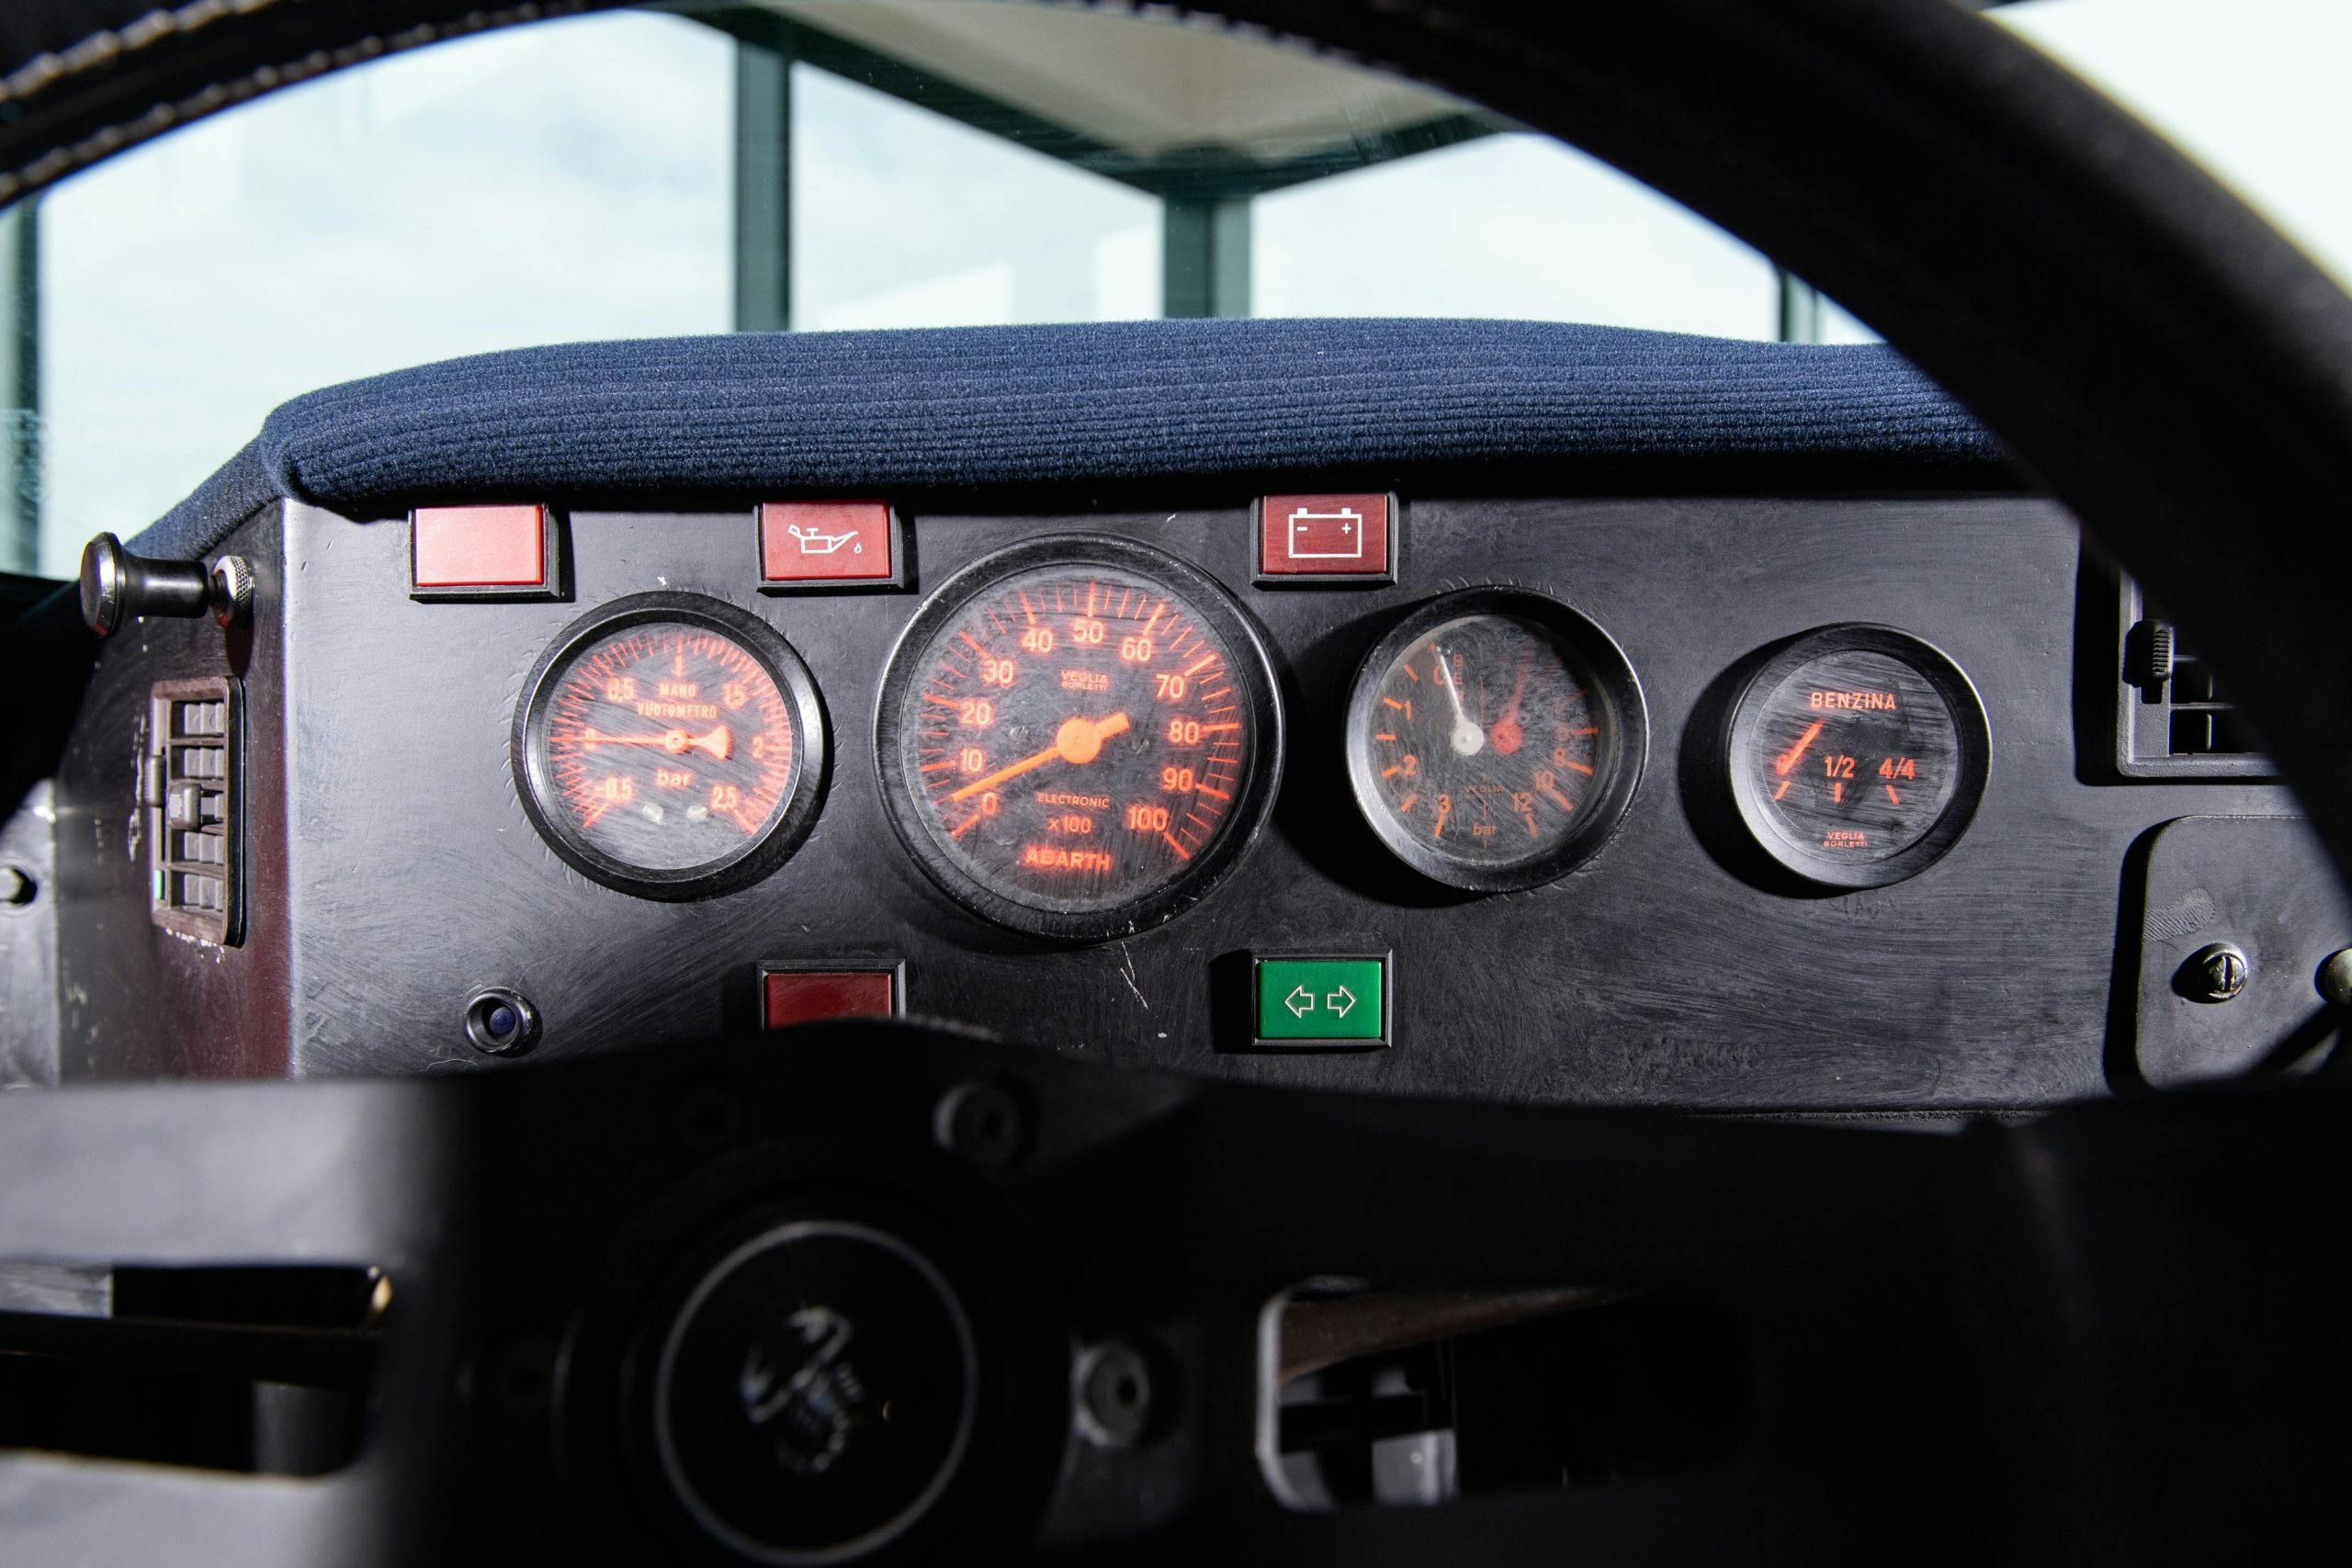 1980 Lancia 037 Prototype interior gauges detail